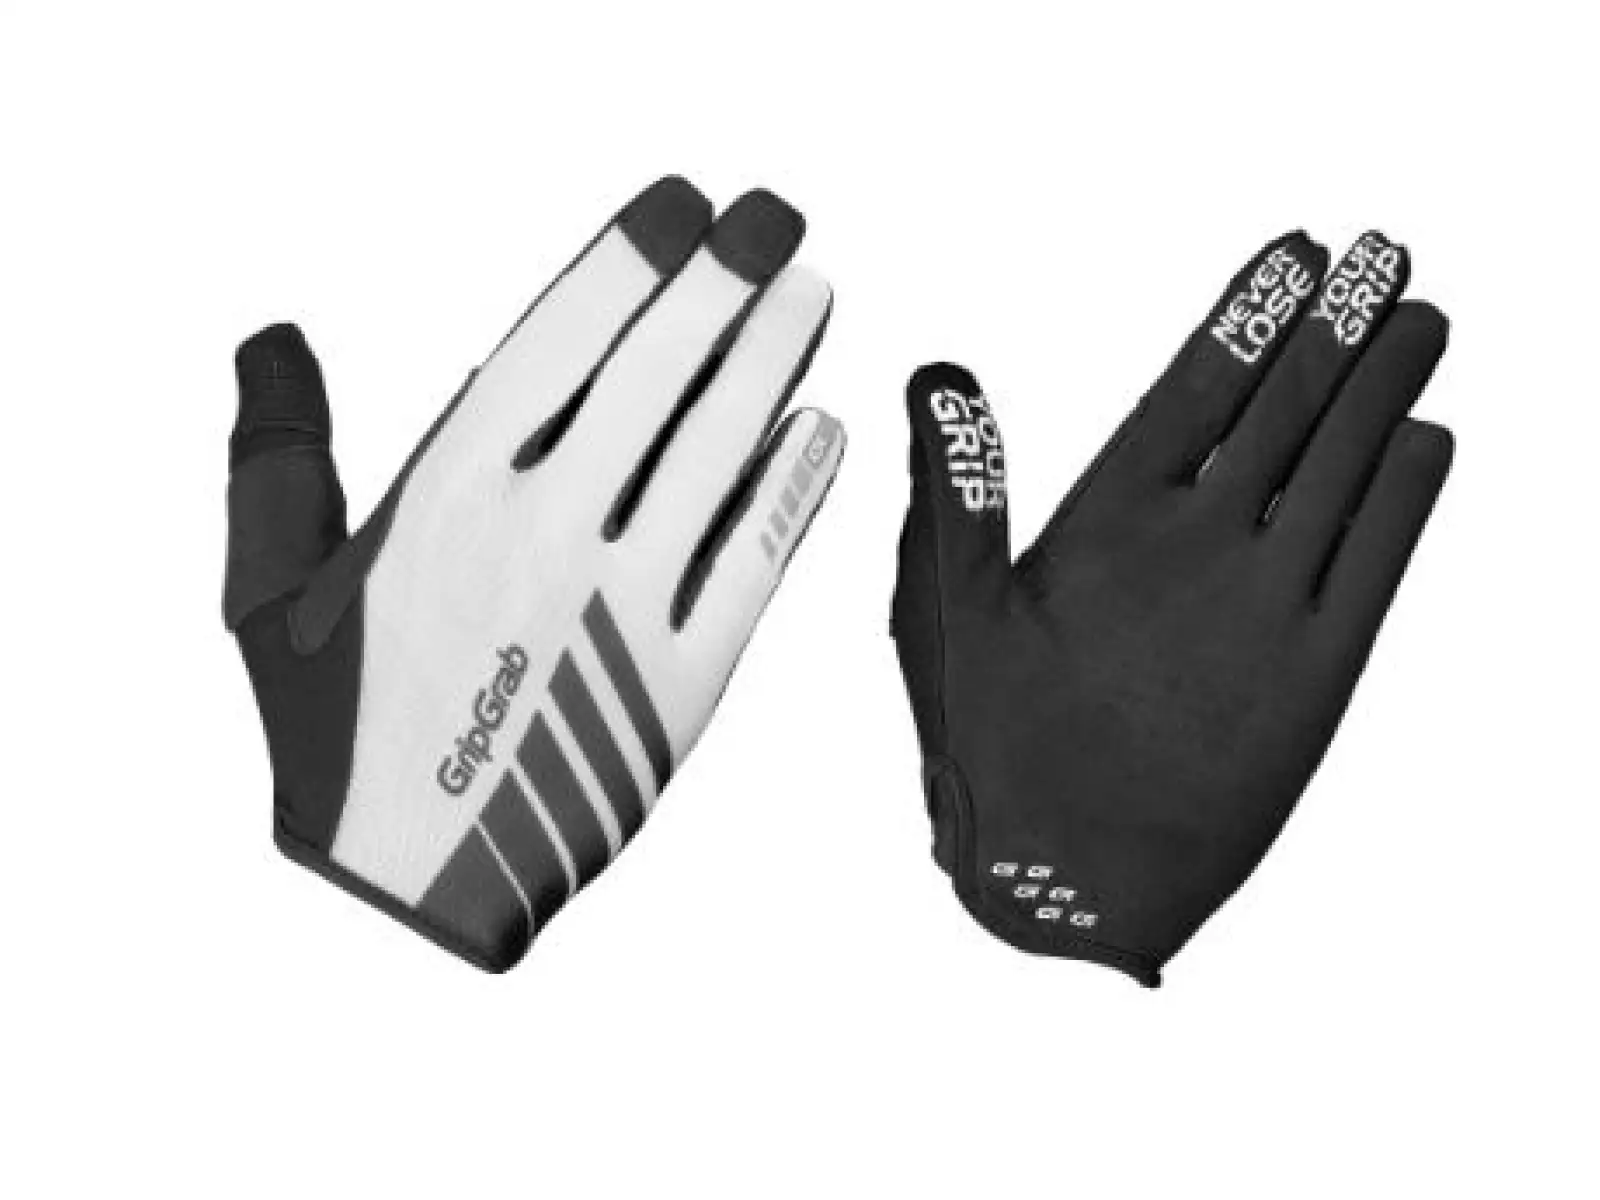 Grip Grab Racing rukavice